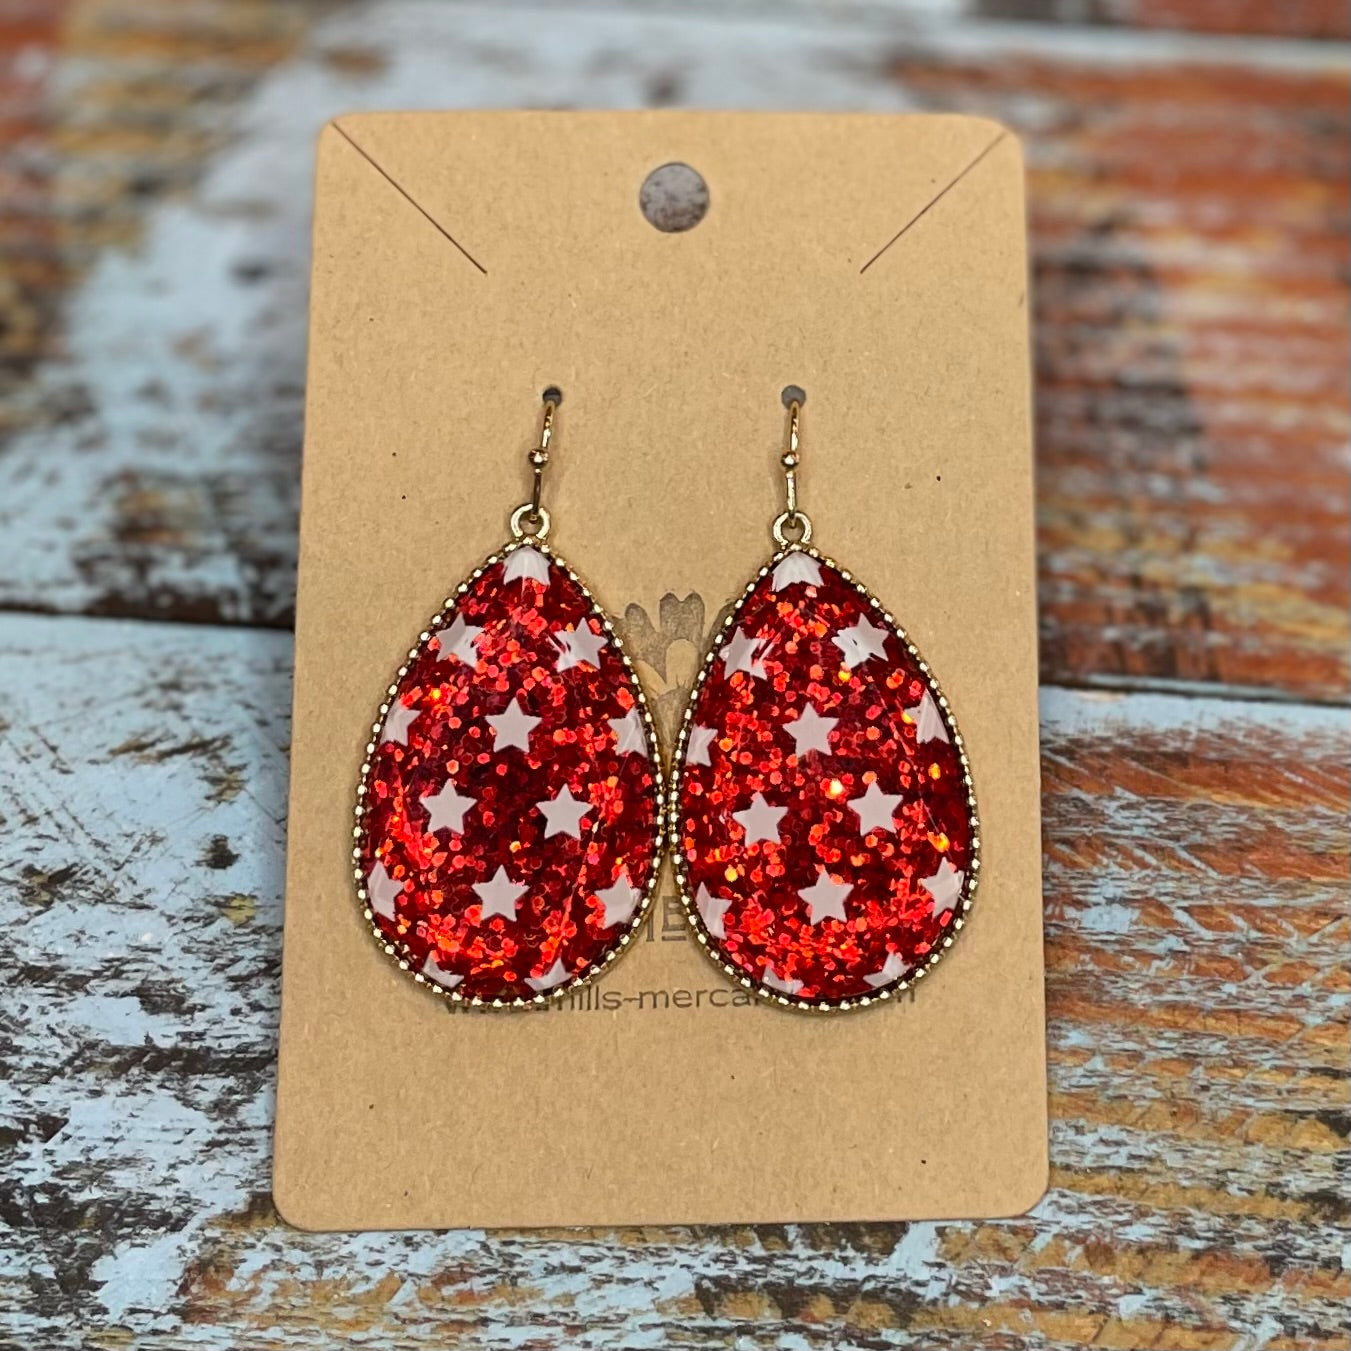 Earrings - Star Spangled Red